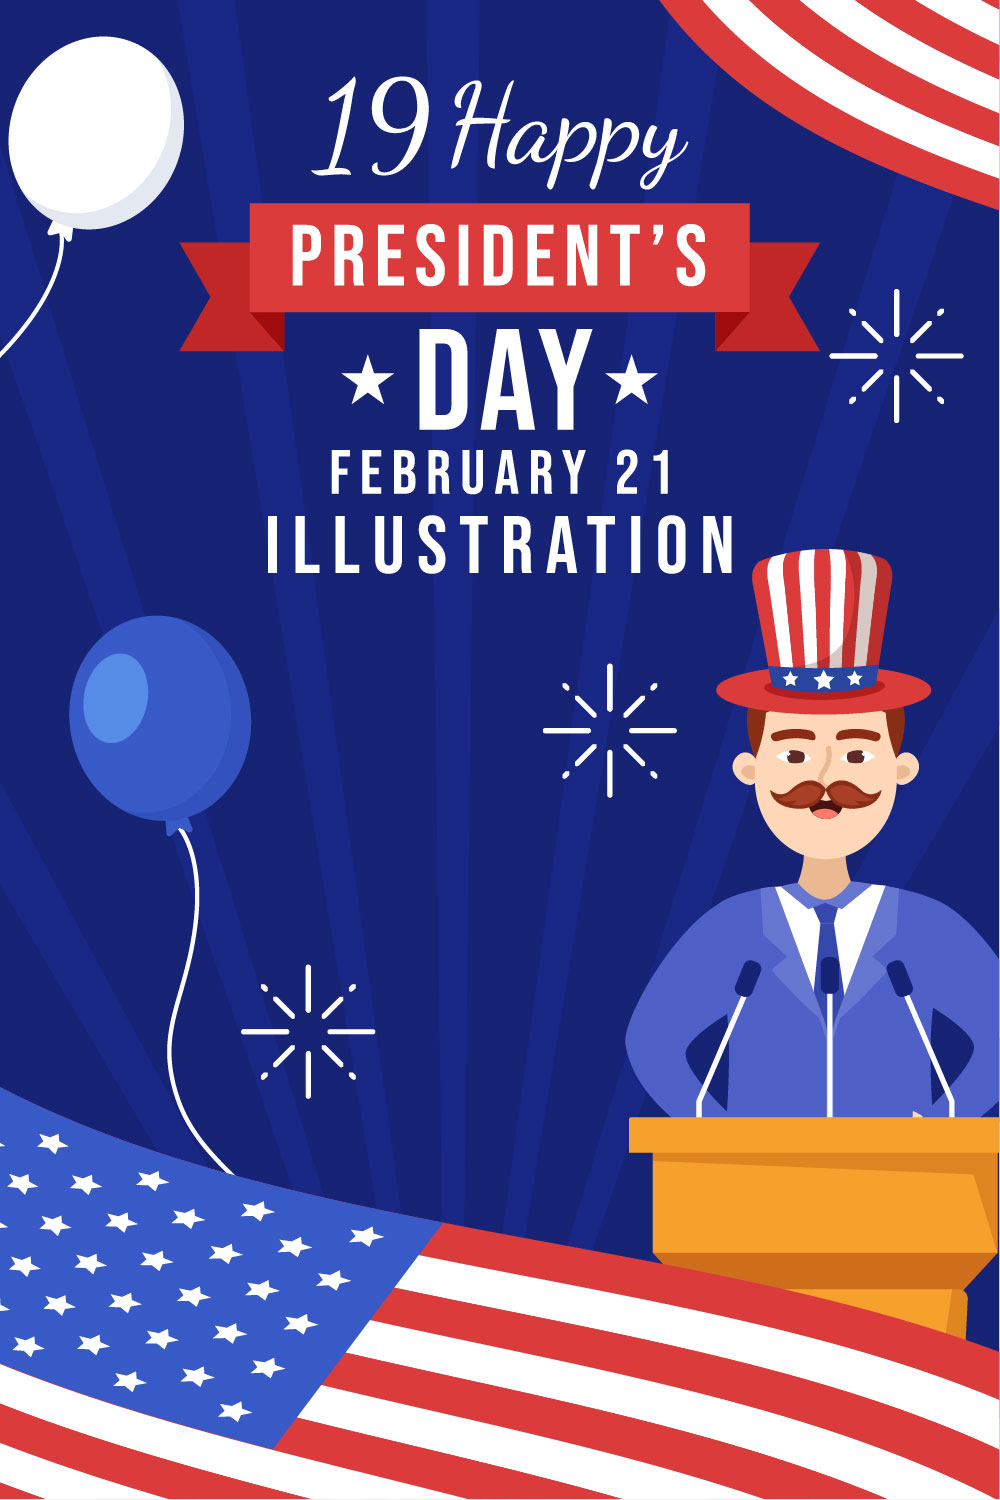 Happy Presidents Day Illustration pinterest image.